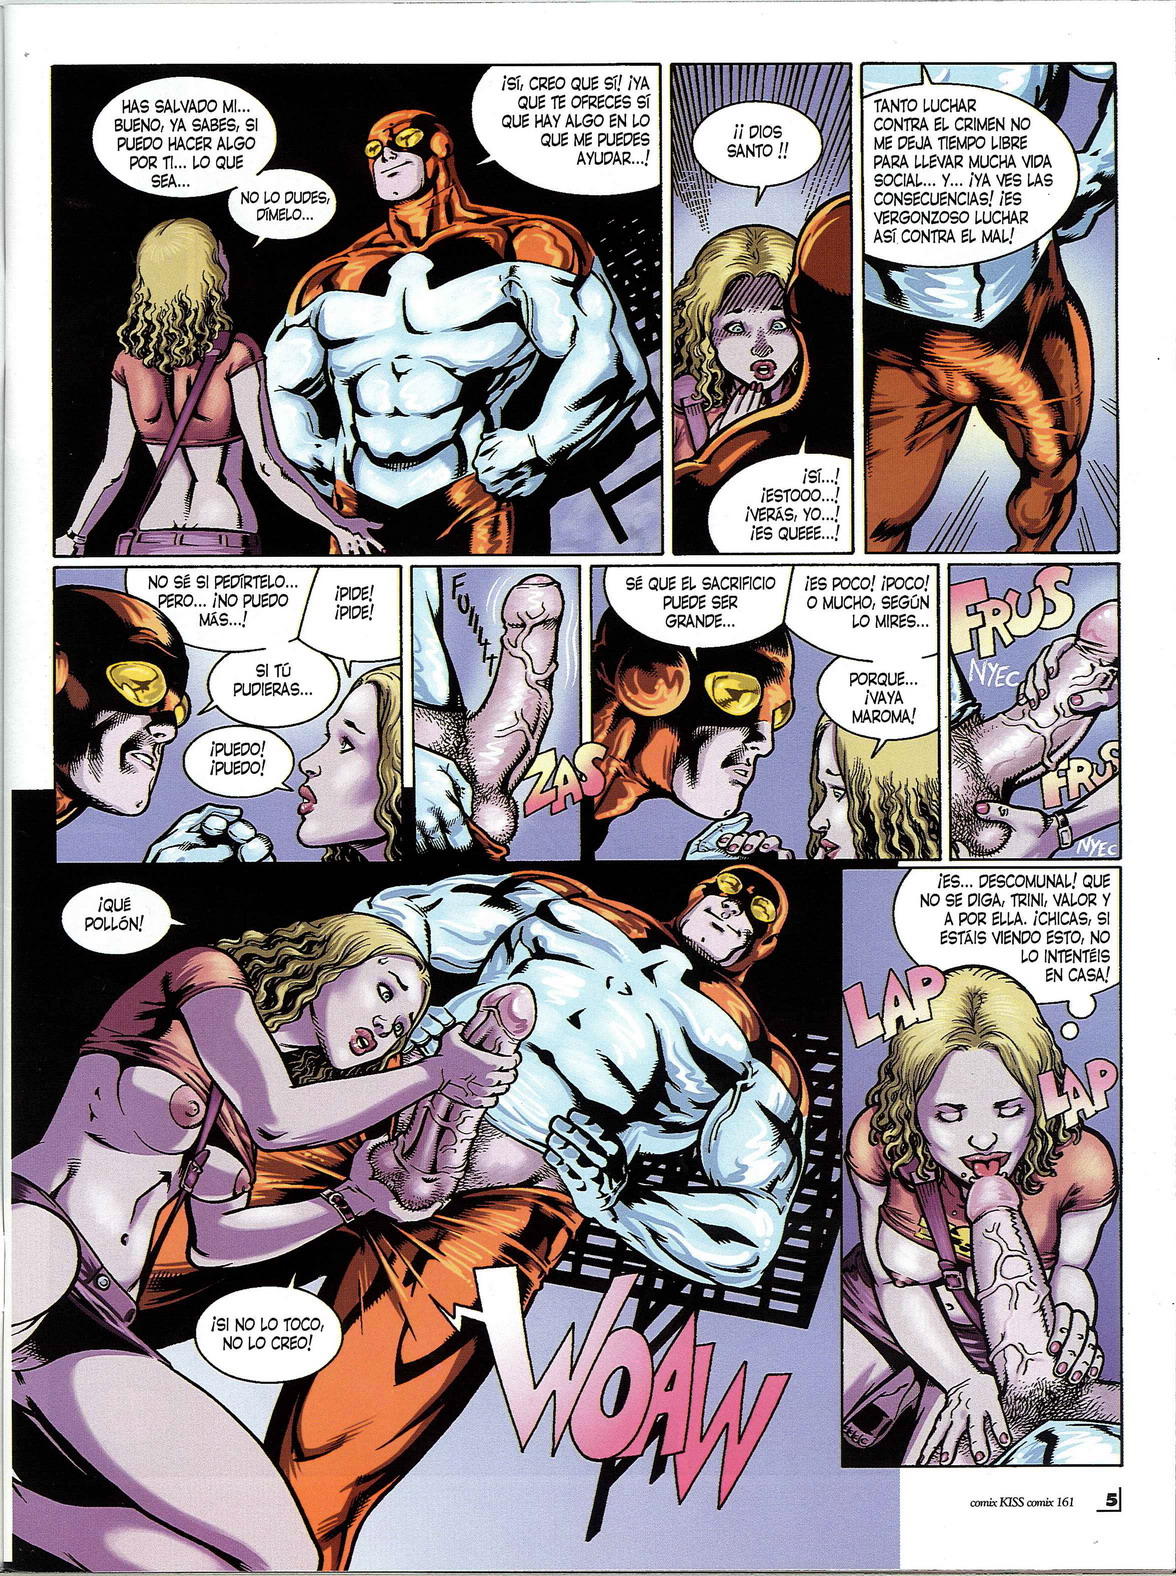 [Comic] Super Heroes de N.Y. (Sin Censura)